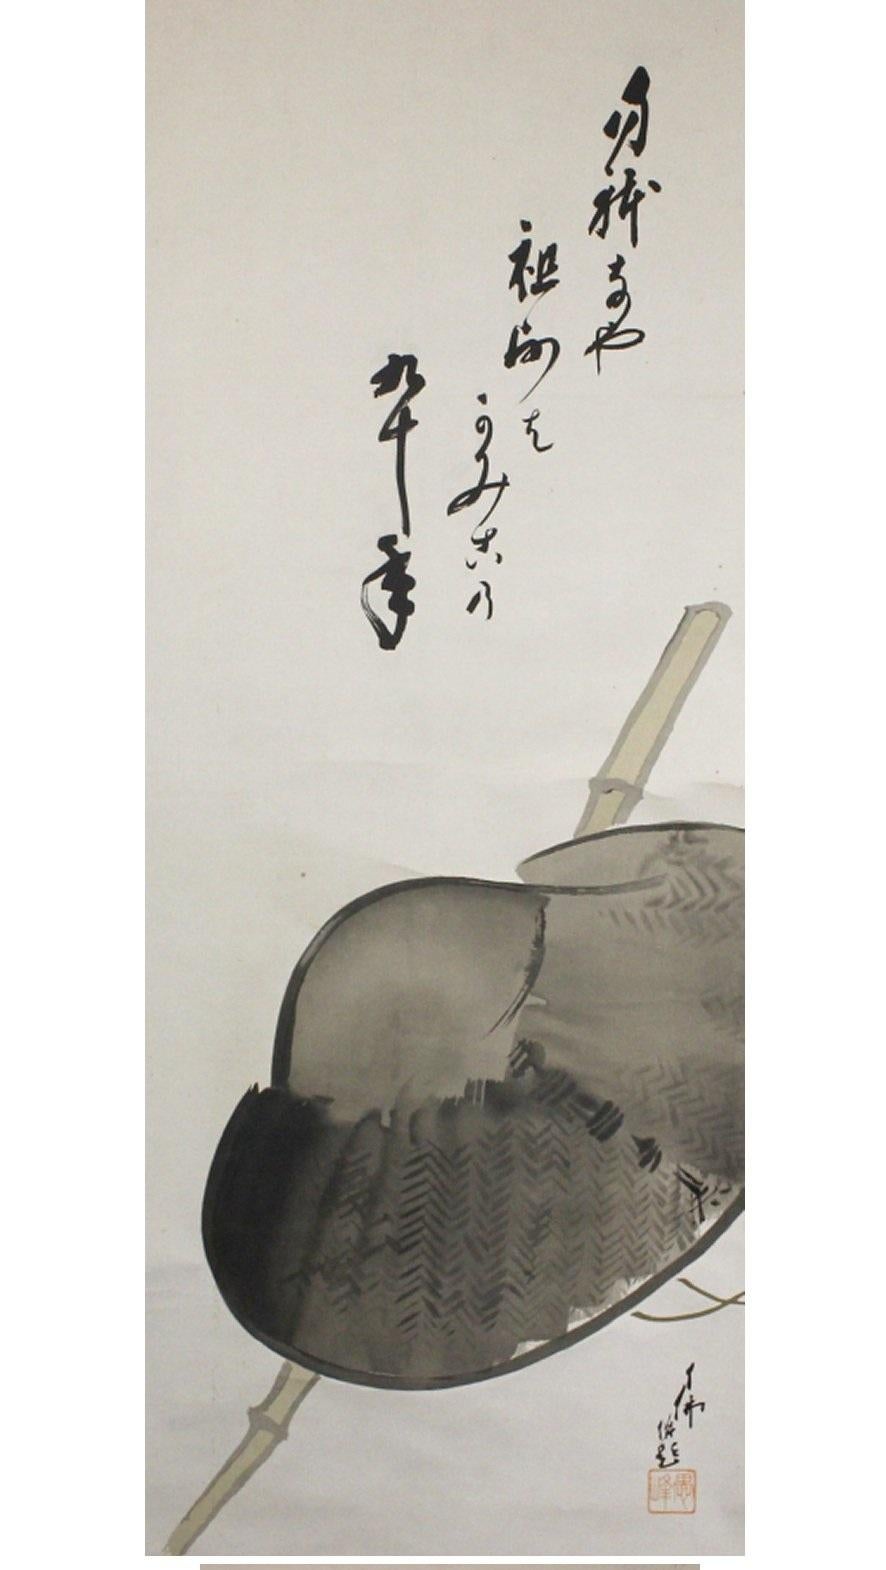 [Otani Kubutsu]
1875-1943, moine de l'école Otani de la secte Shinshu (23e chef du temple Higashi Honganji) pendant la période Meiji-Showa.
Nom de dharma : Shonyo. Nom littéraire : Kōen.
Numéro : Gumine. Nom du haïku : Kubutsu.
Deuxième fils de